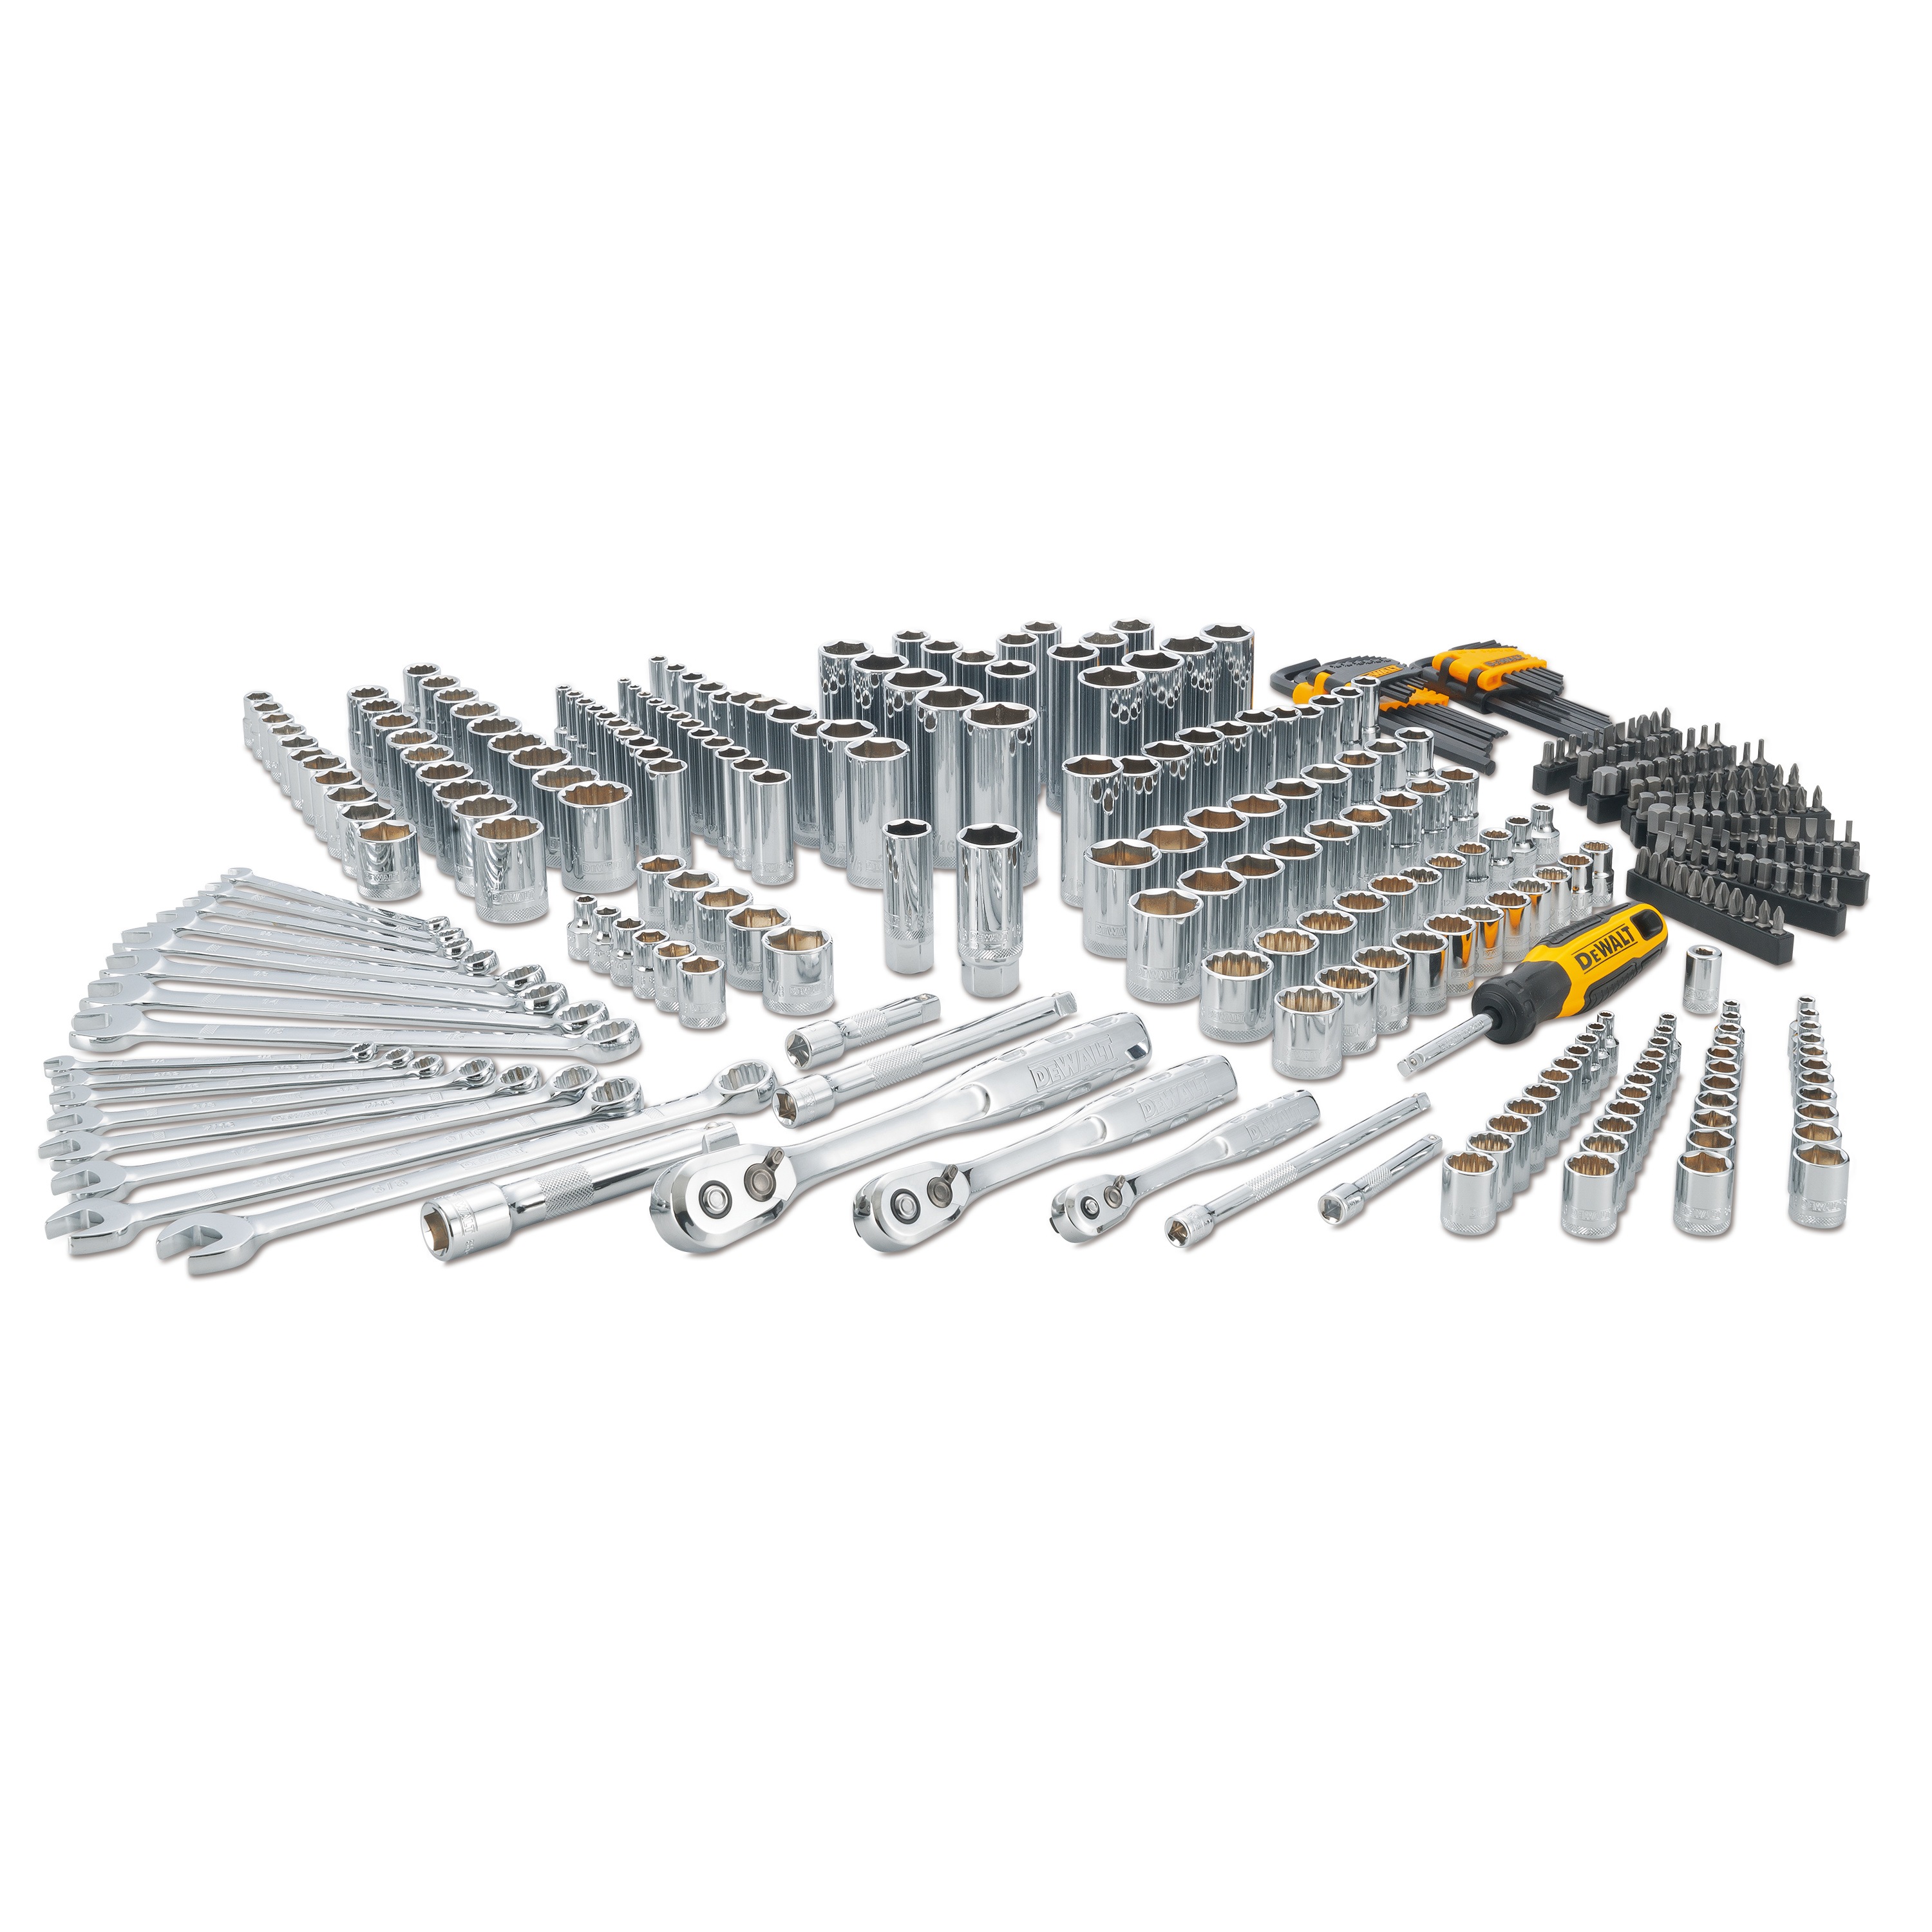 Profile of 341 piece DEWALT mechanics tools set.